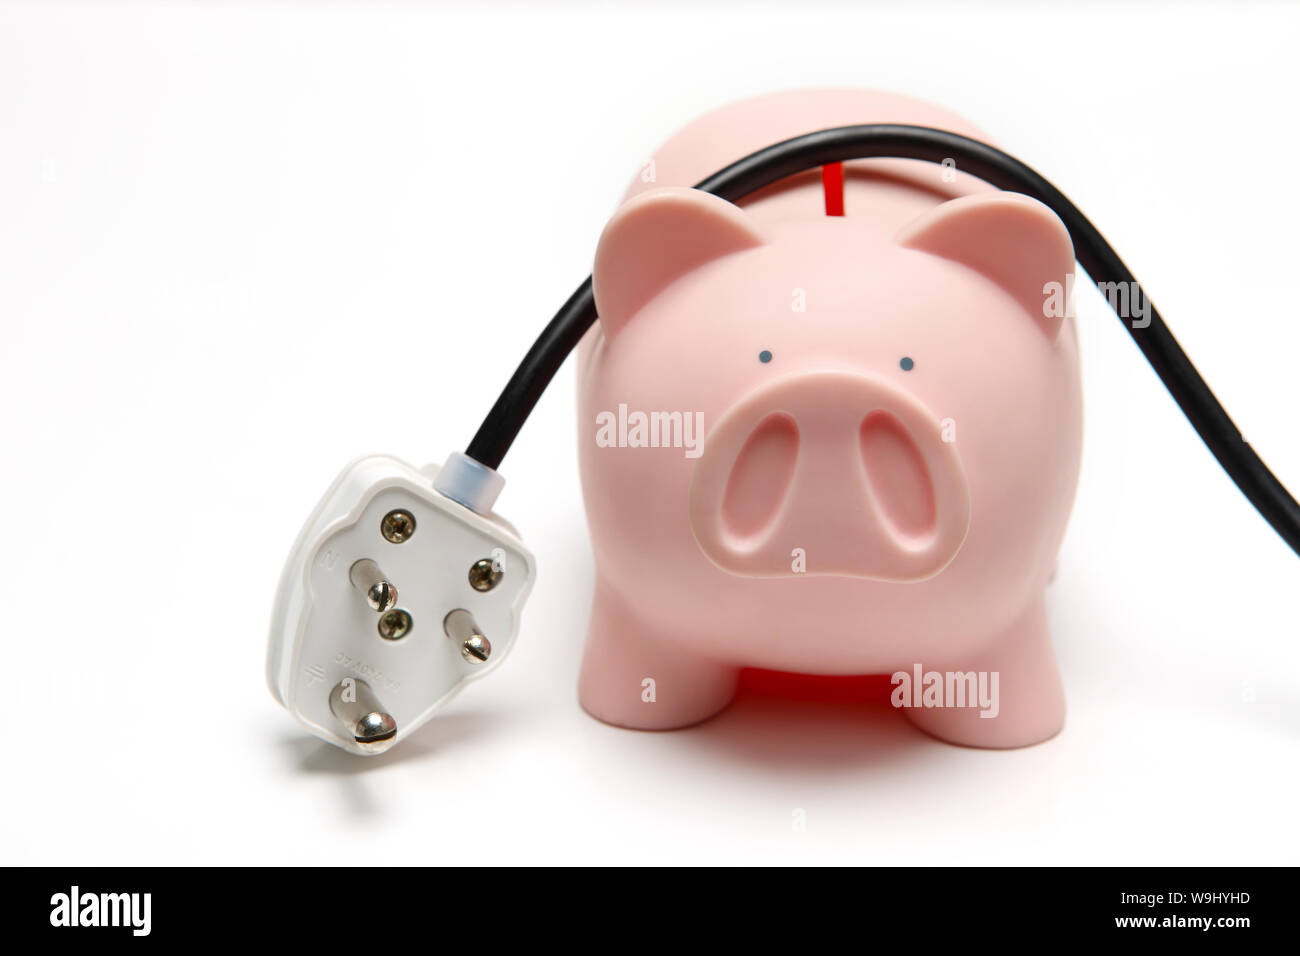 Electrical plug on a piggy bank Stock Photo